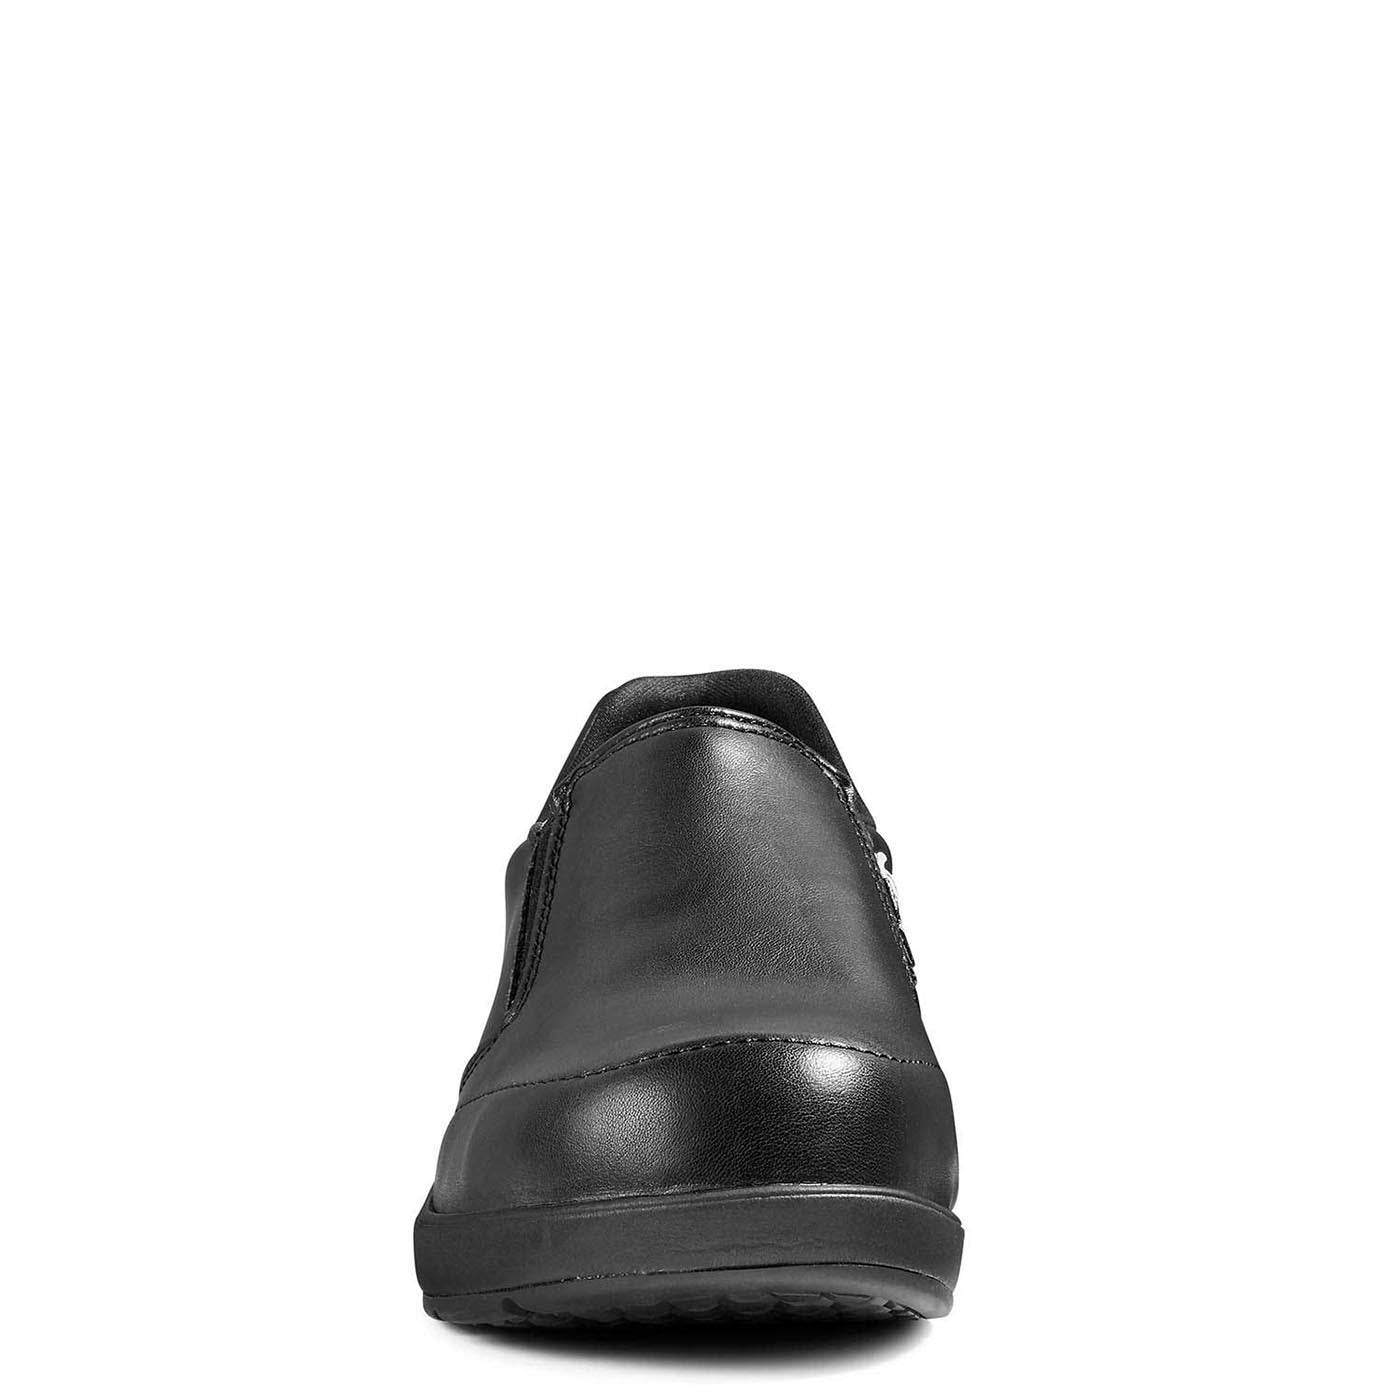 Kodiak Britt Pull-On Steel Toe Flex Women's Safety Shoes | Black | Sizes 5 - 10 Work Boots - Cleanflow